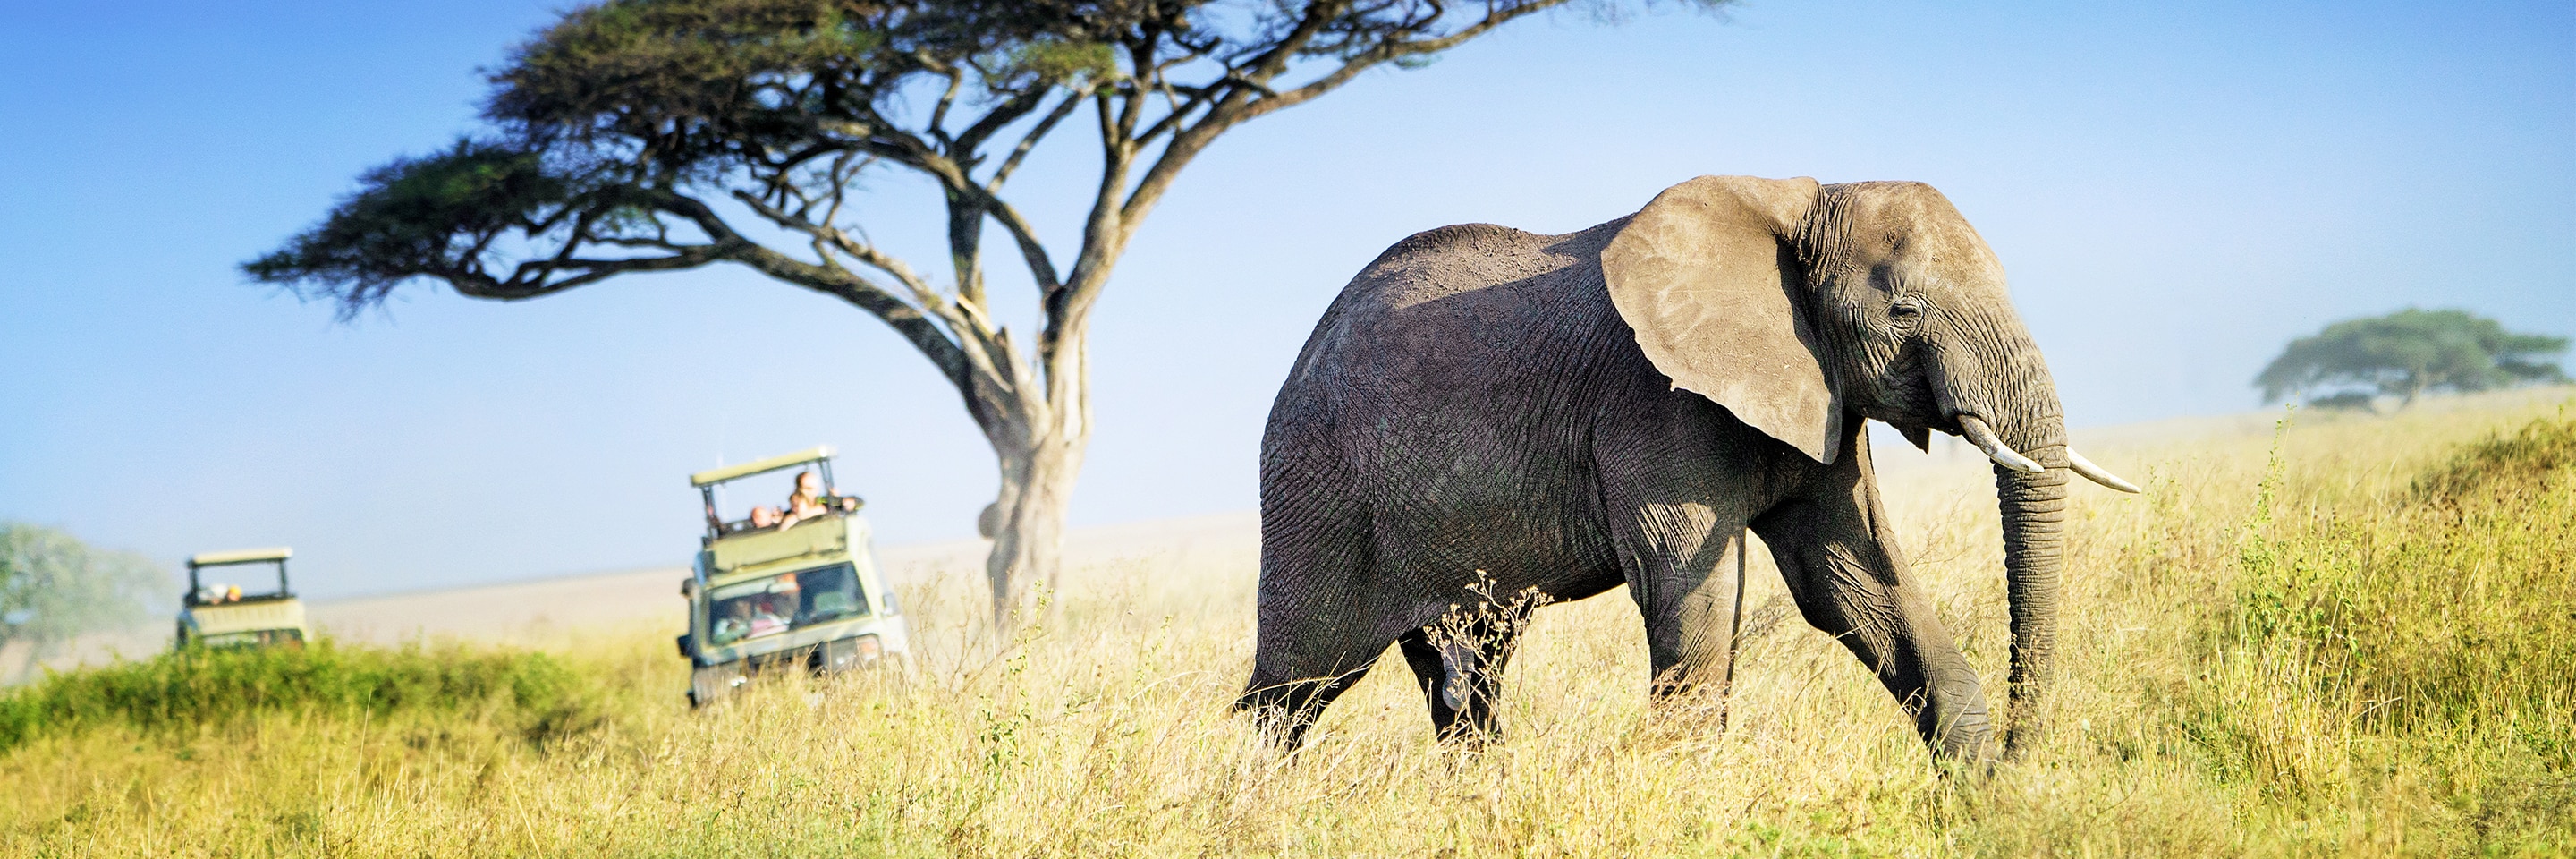 Elephant seen on African safari adventure.